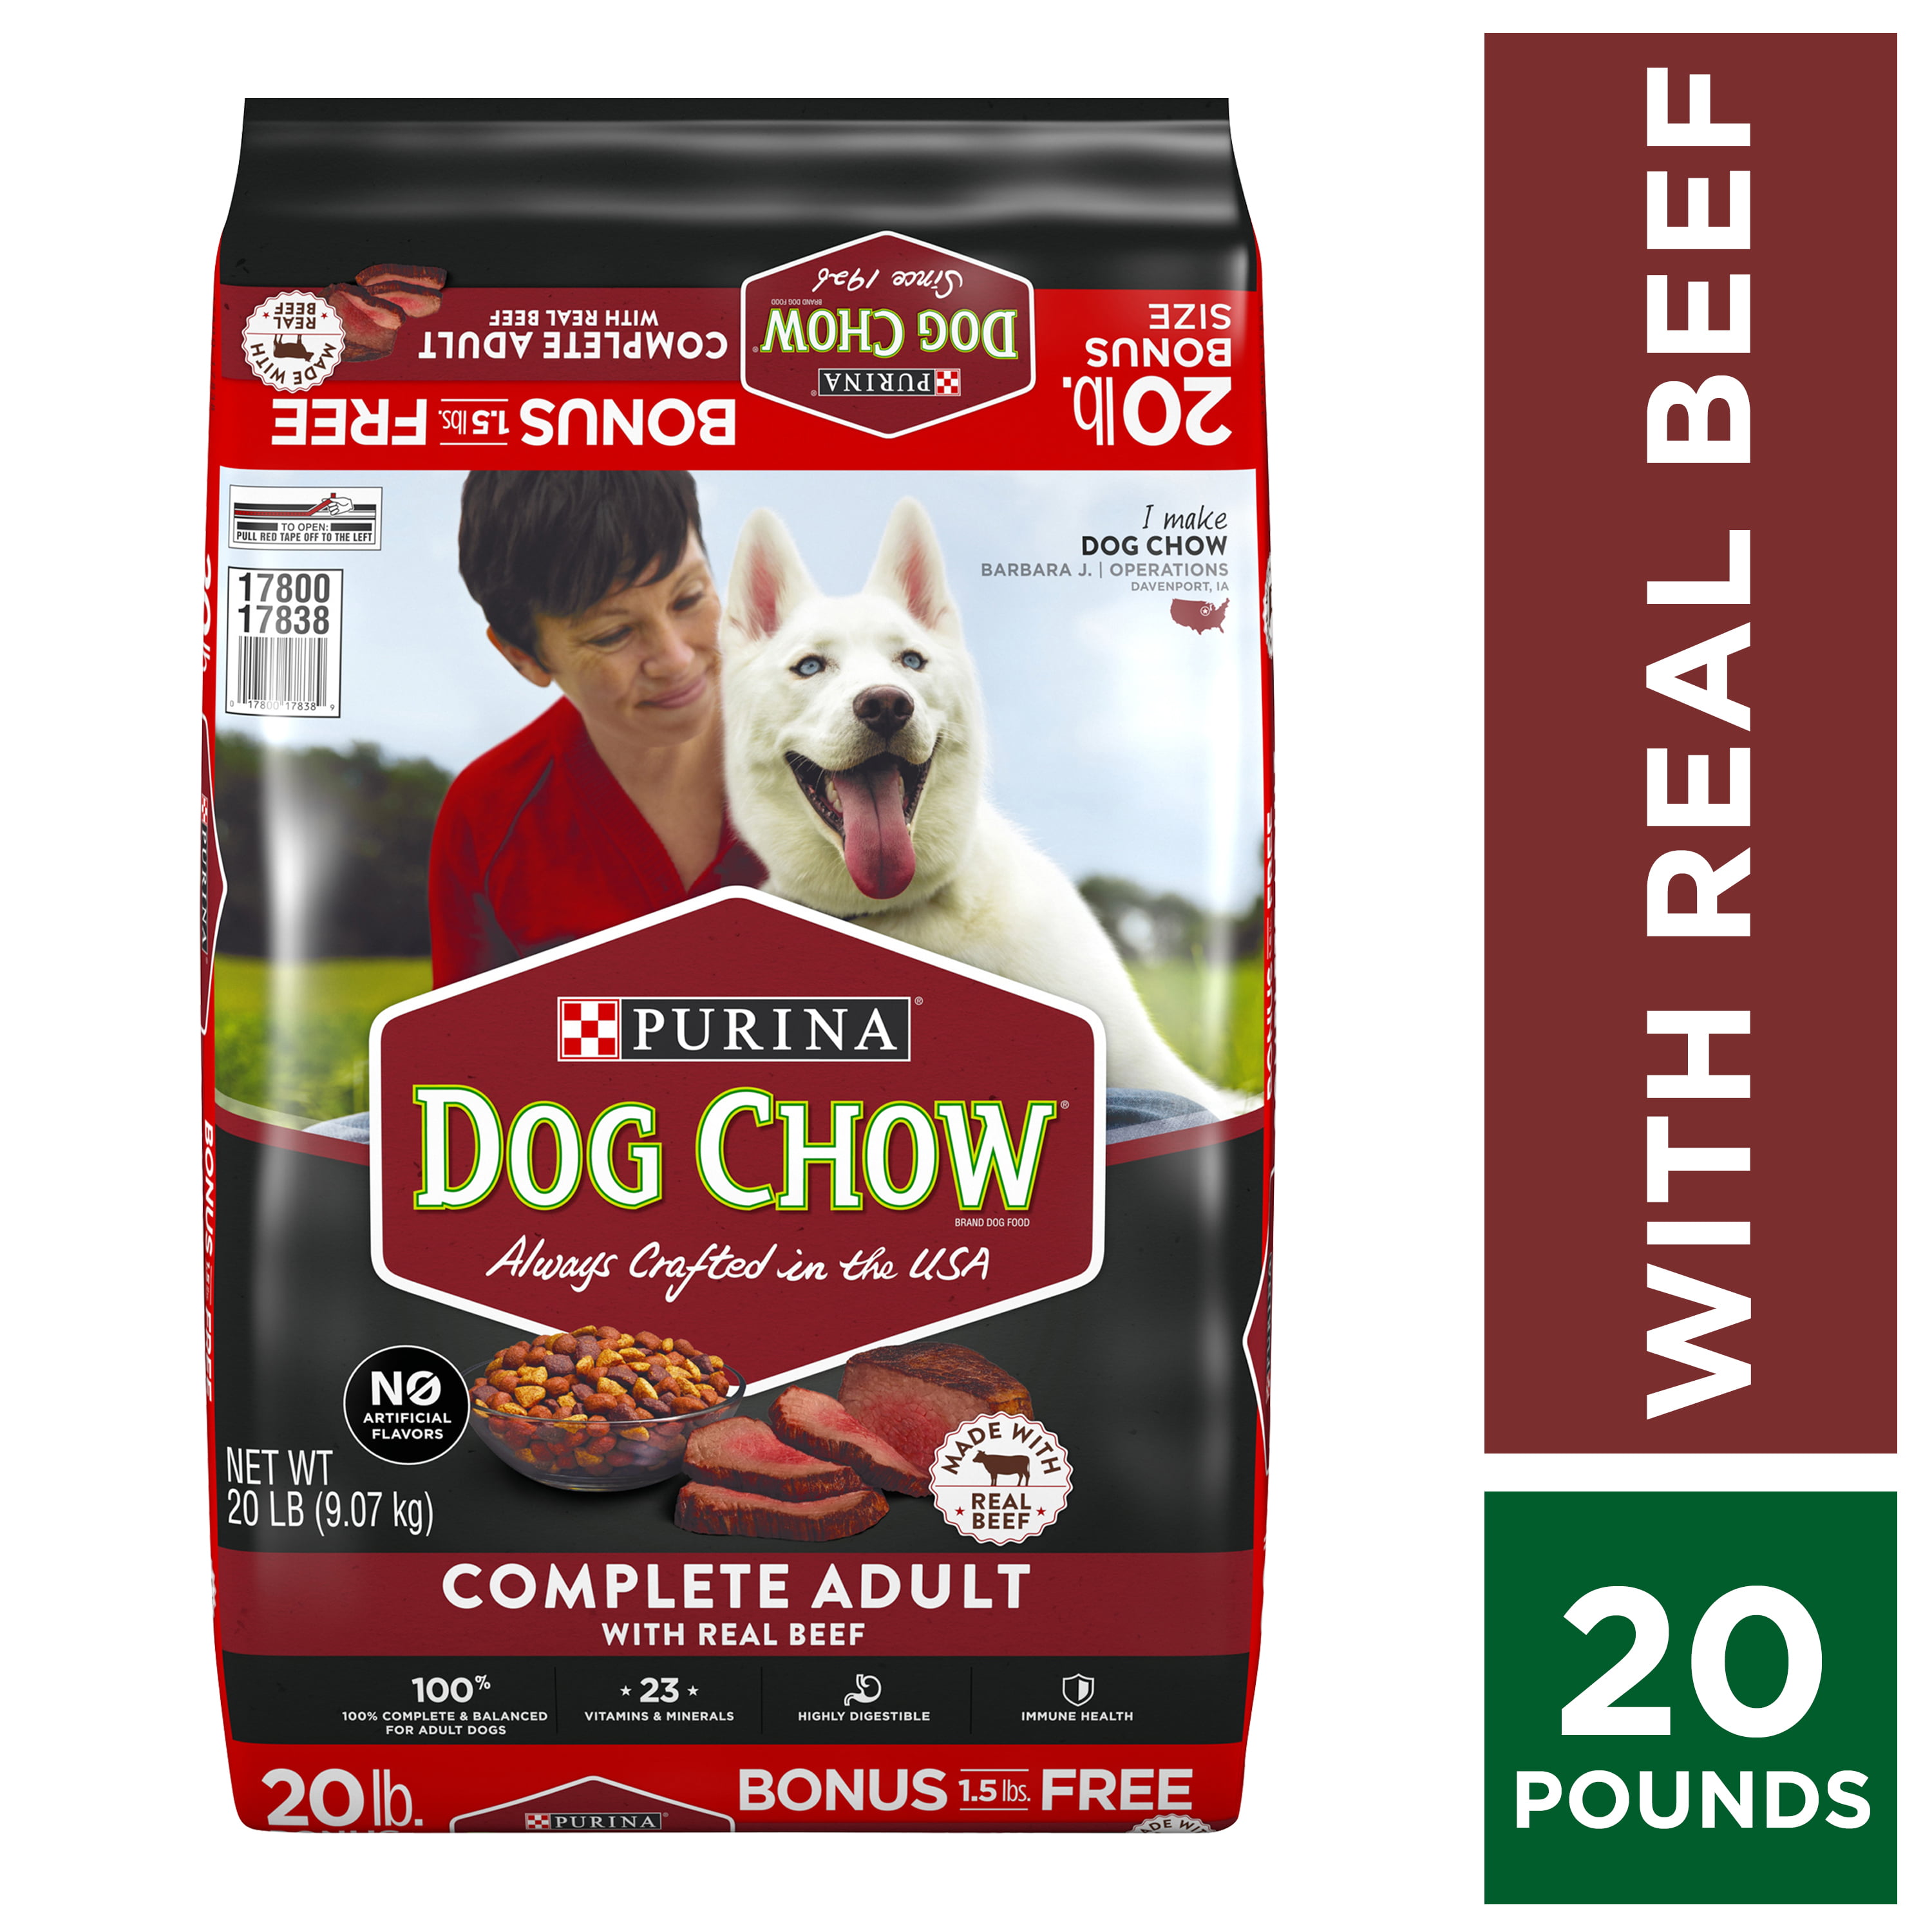 purina dog chow mature